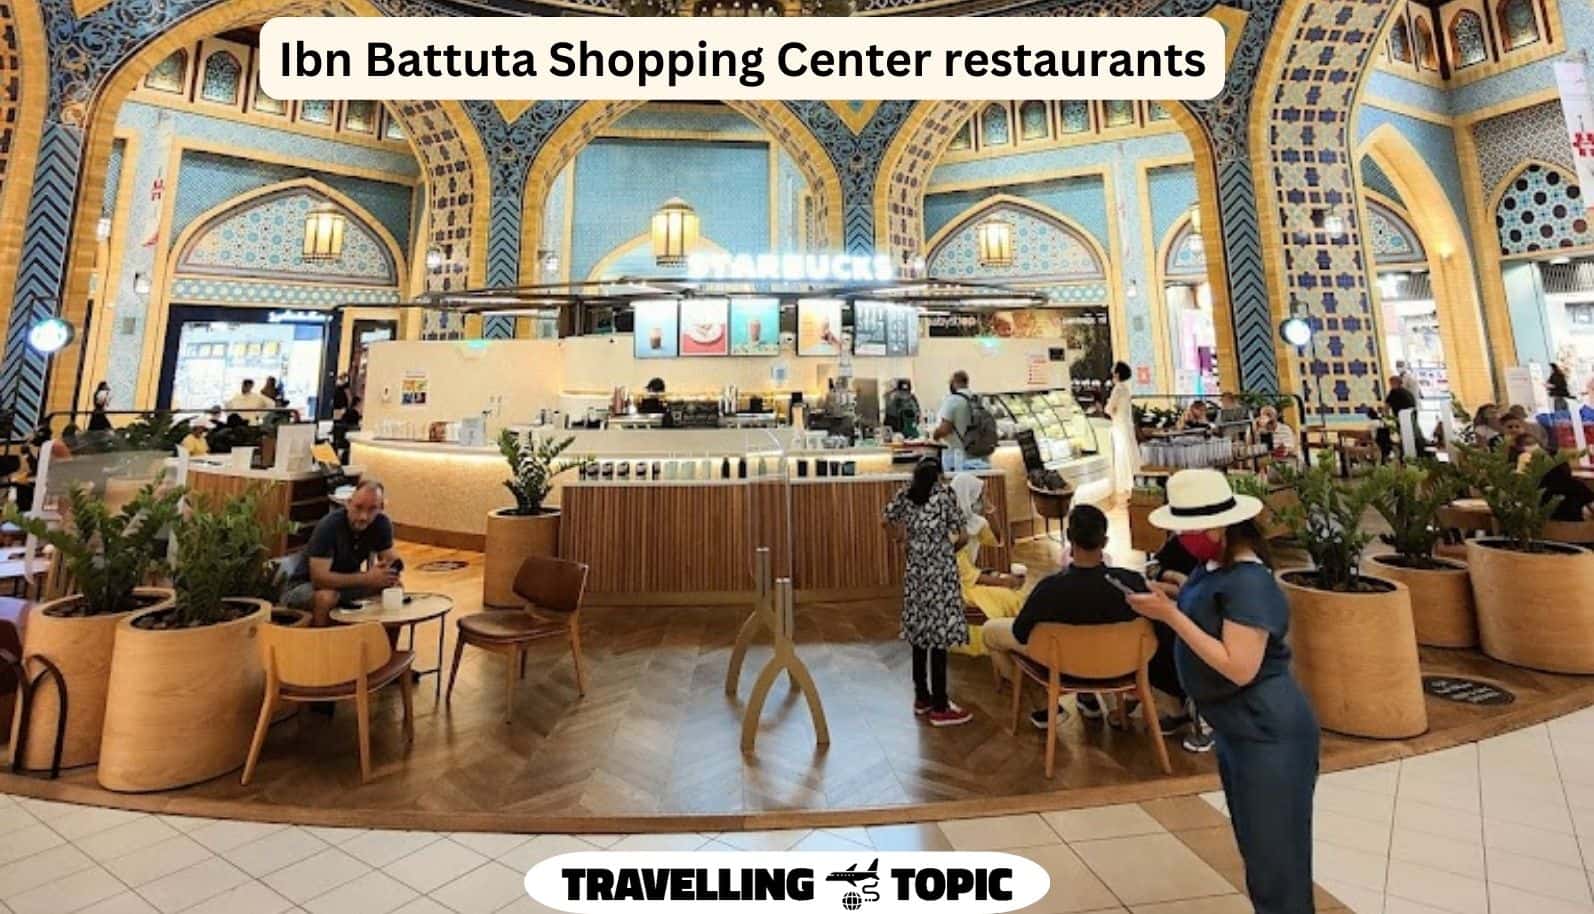 Ibn Battuta Shopping Center restaurants